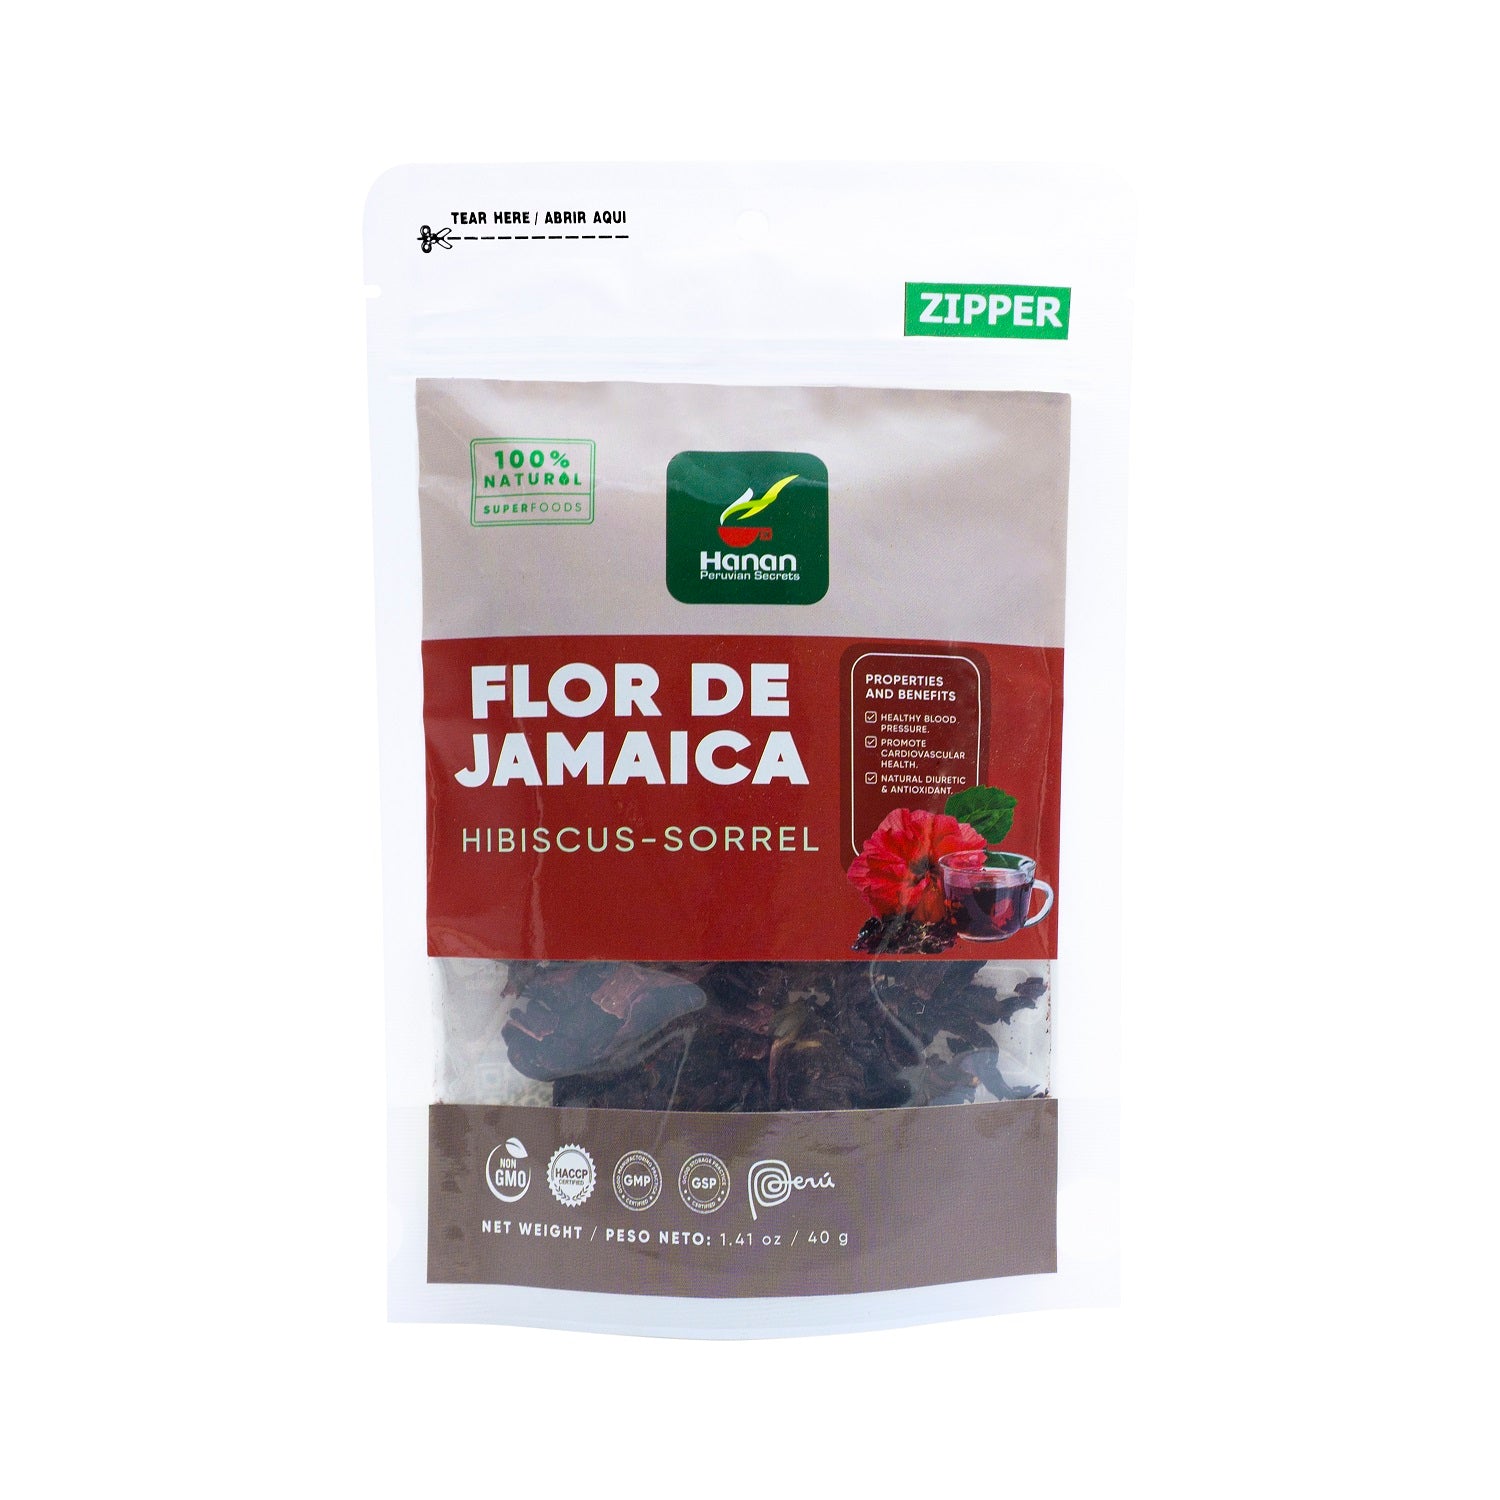 Flor de Jamaica | Hibiscus-Sorrel Loose Tea | 1.41oz (40g)